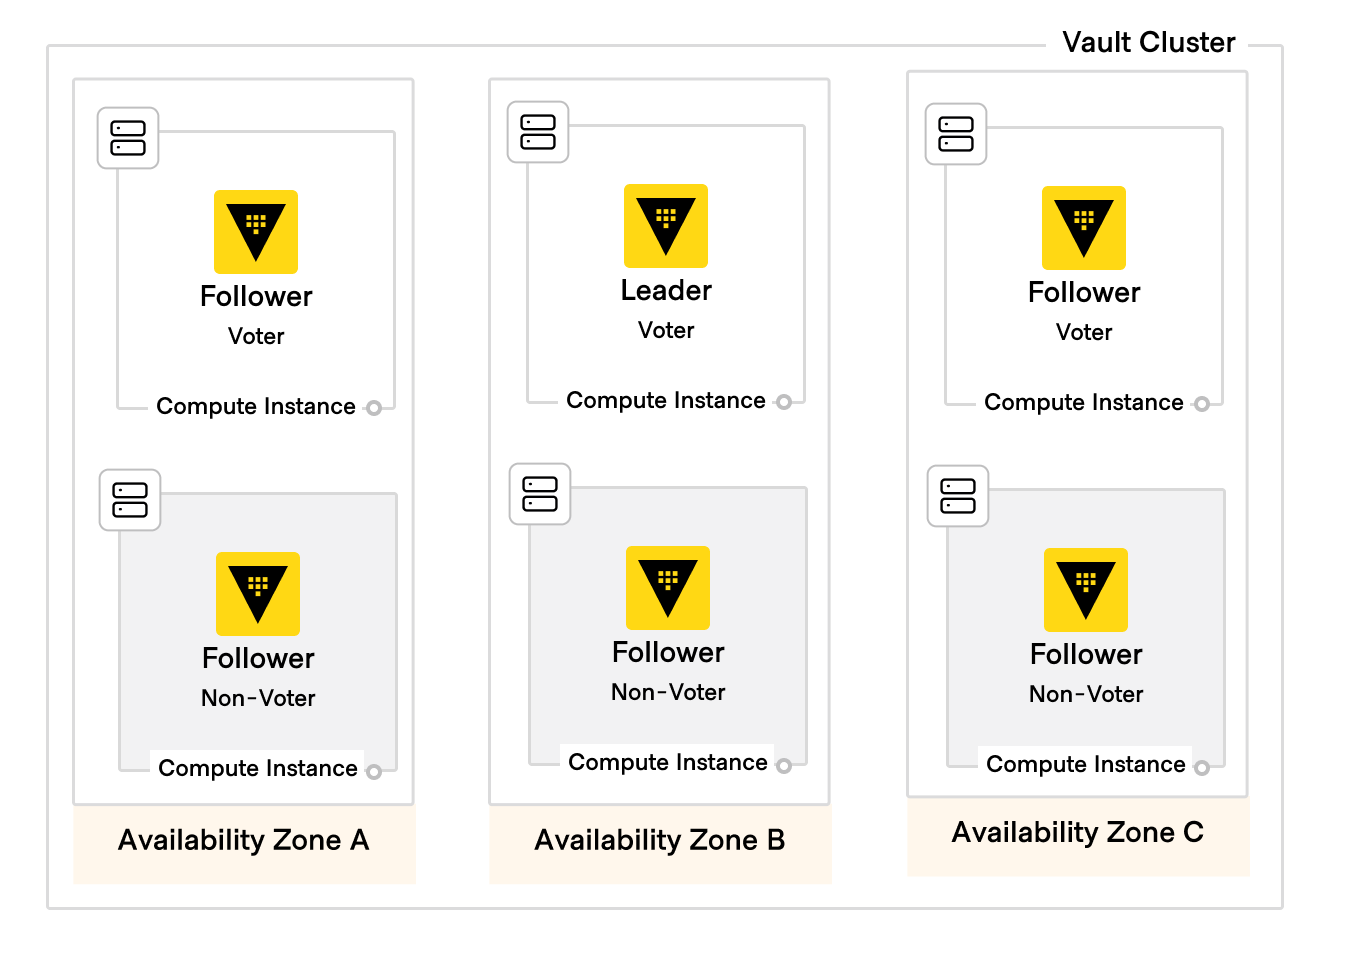 HVD Vault HA 6 nodes redundancy zones diagram